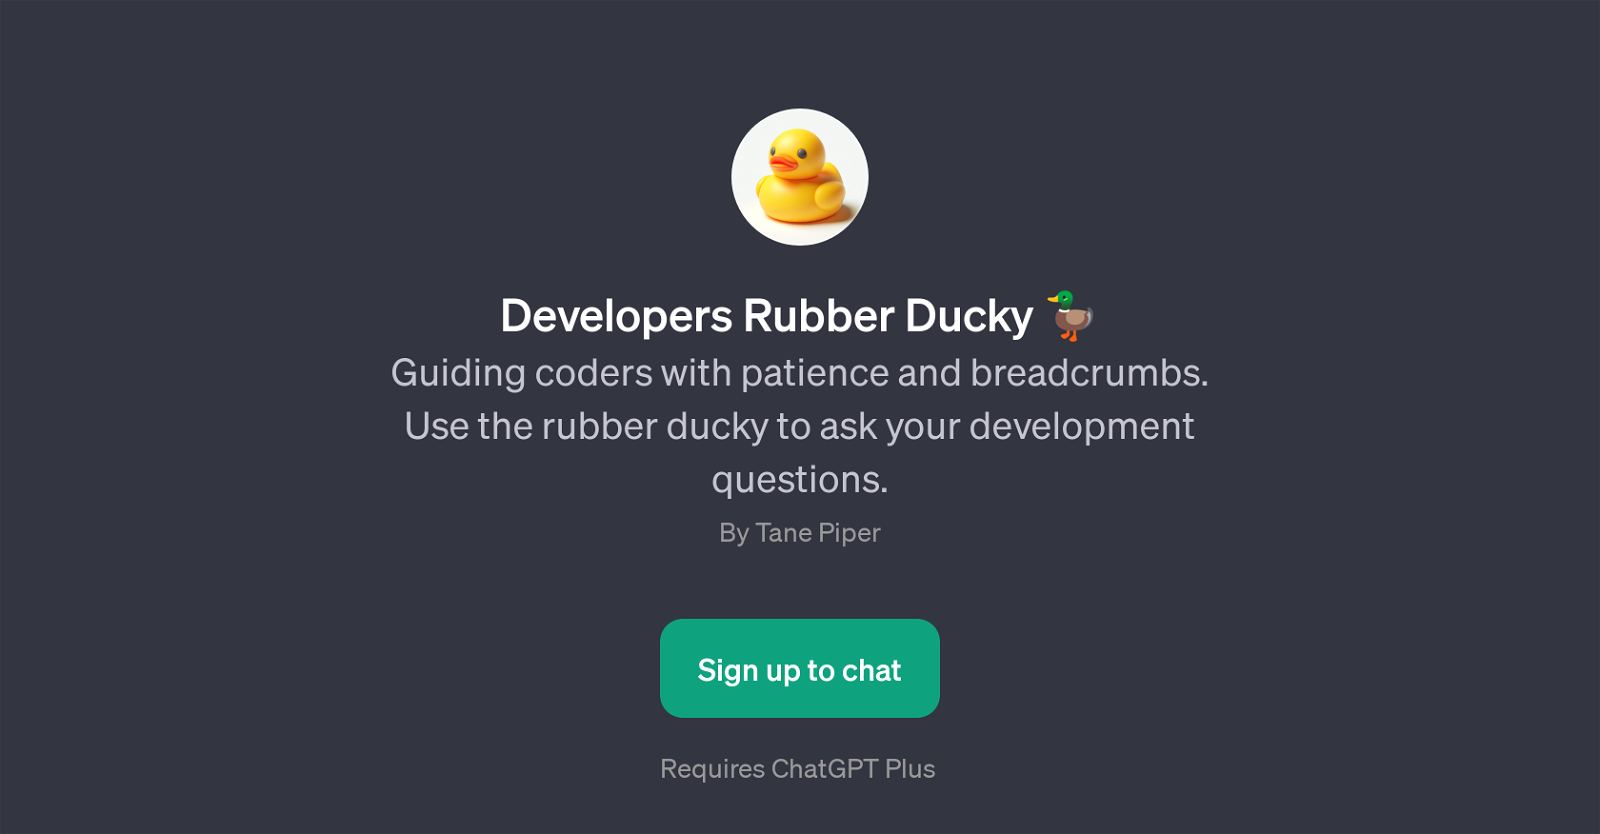 Developers Rubber Ducky website